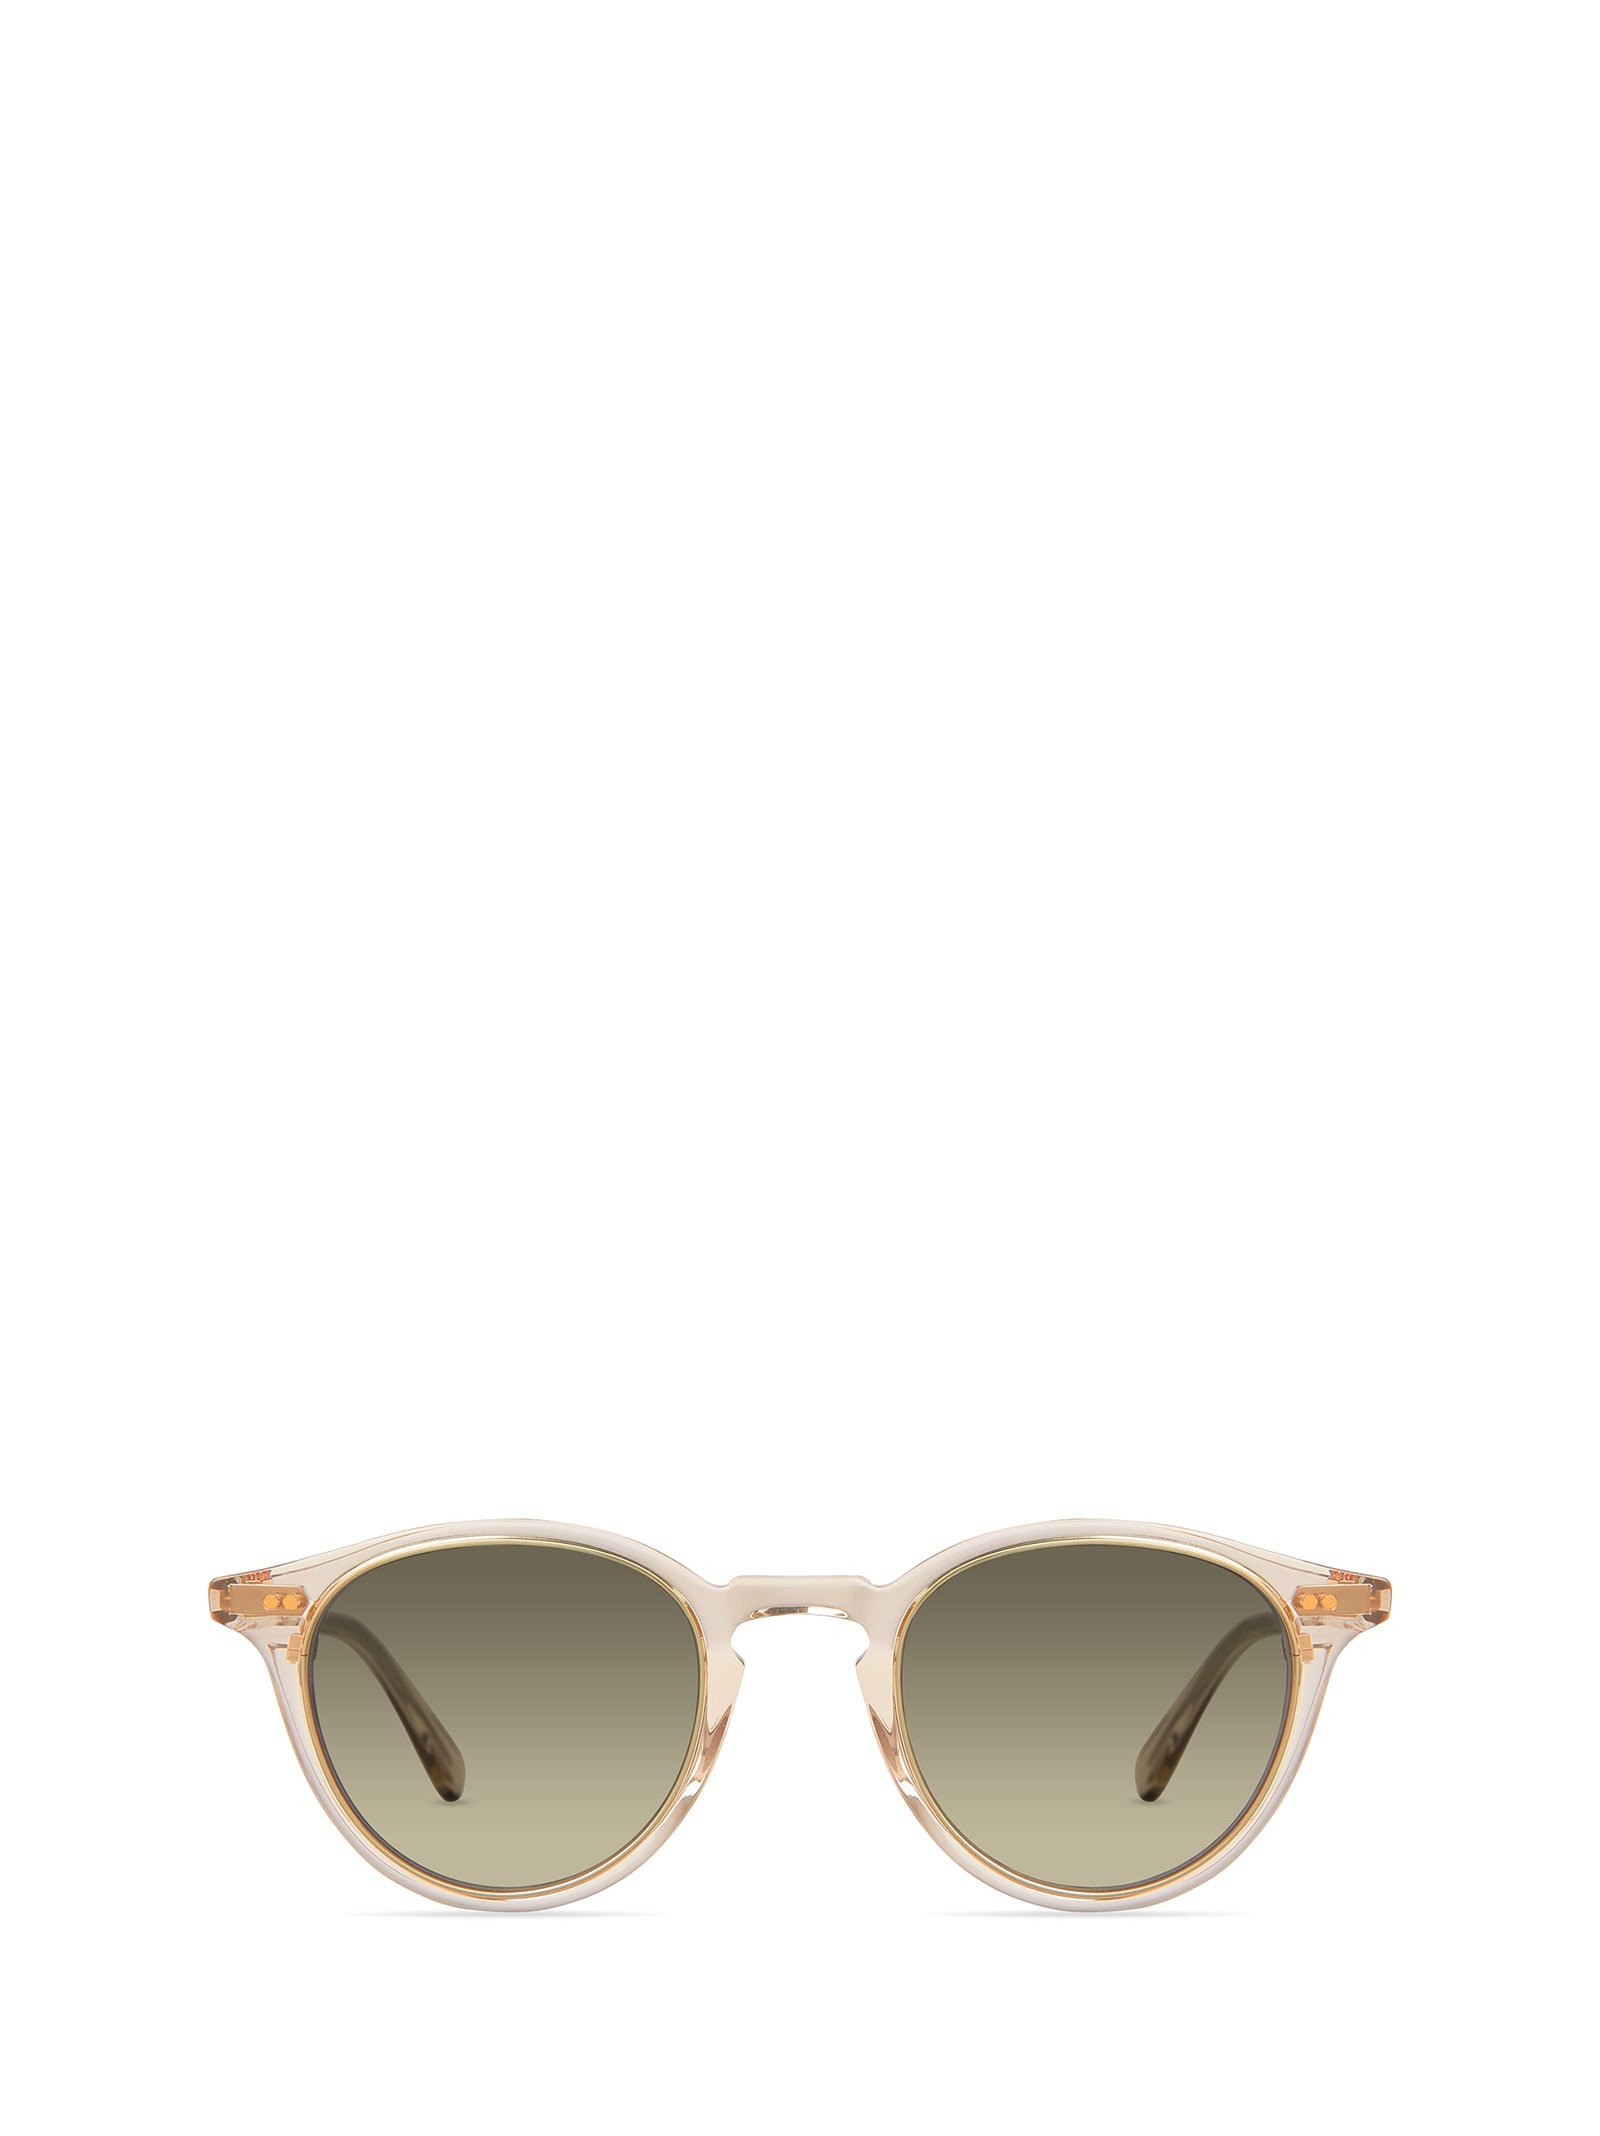 Marmont Ii S Dune-white Gold Sunglasses